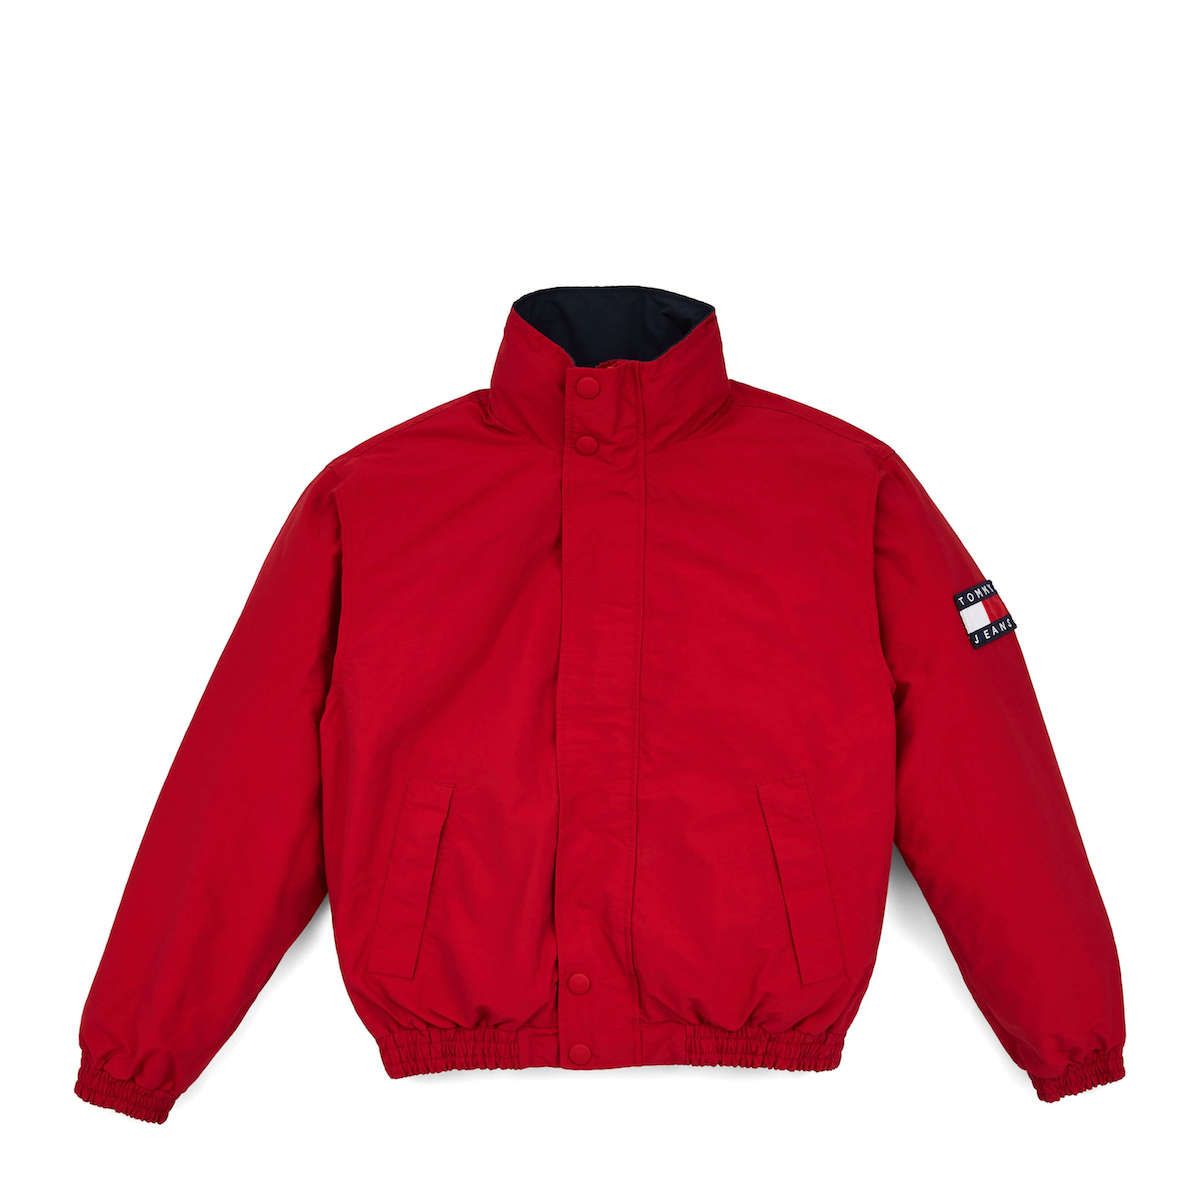 tommy hilfiger limited edition jacket